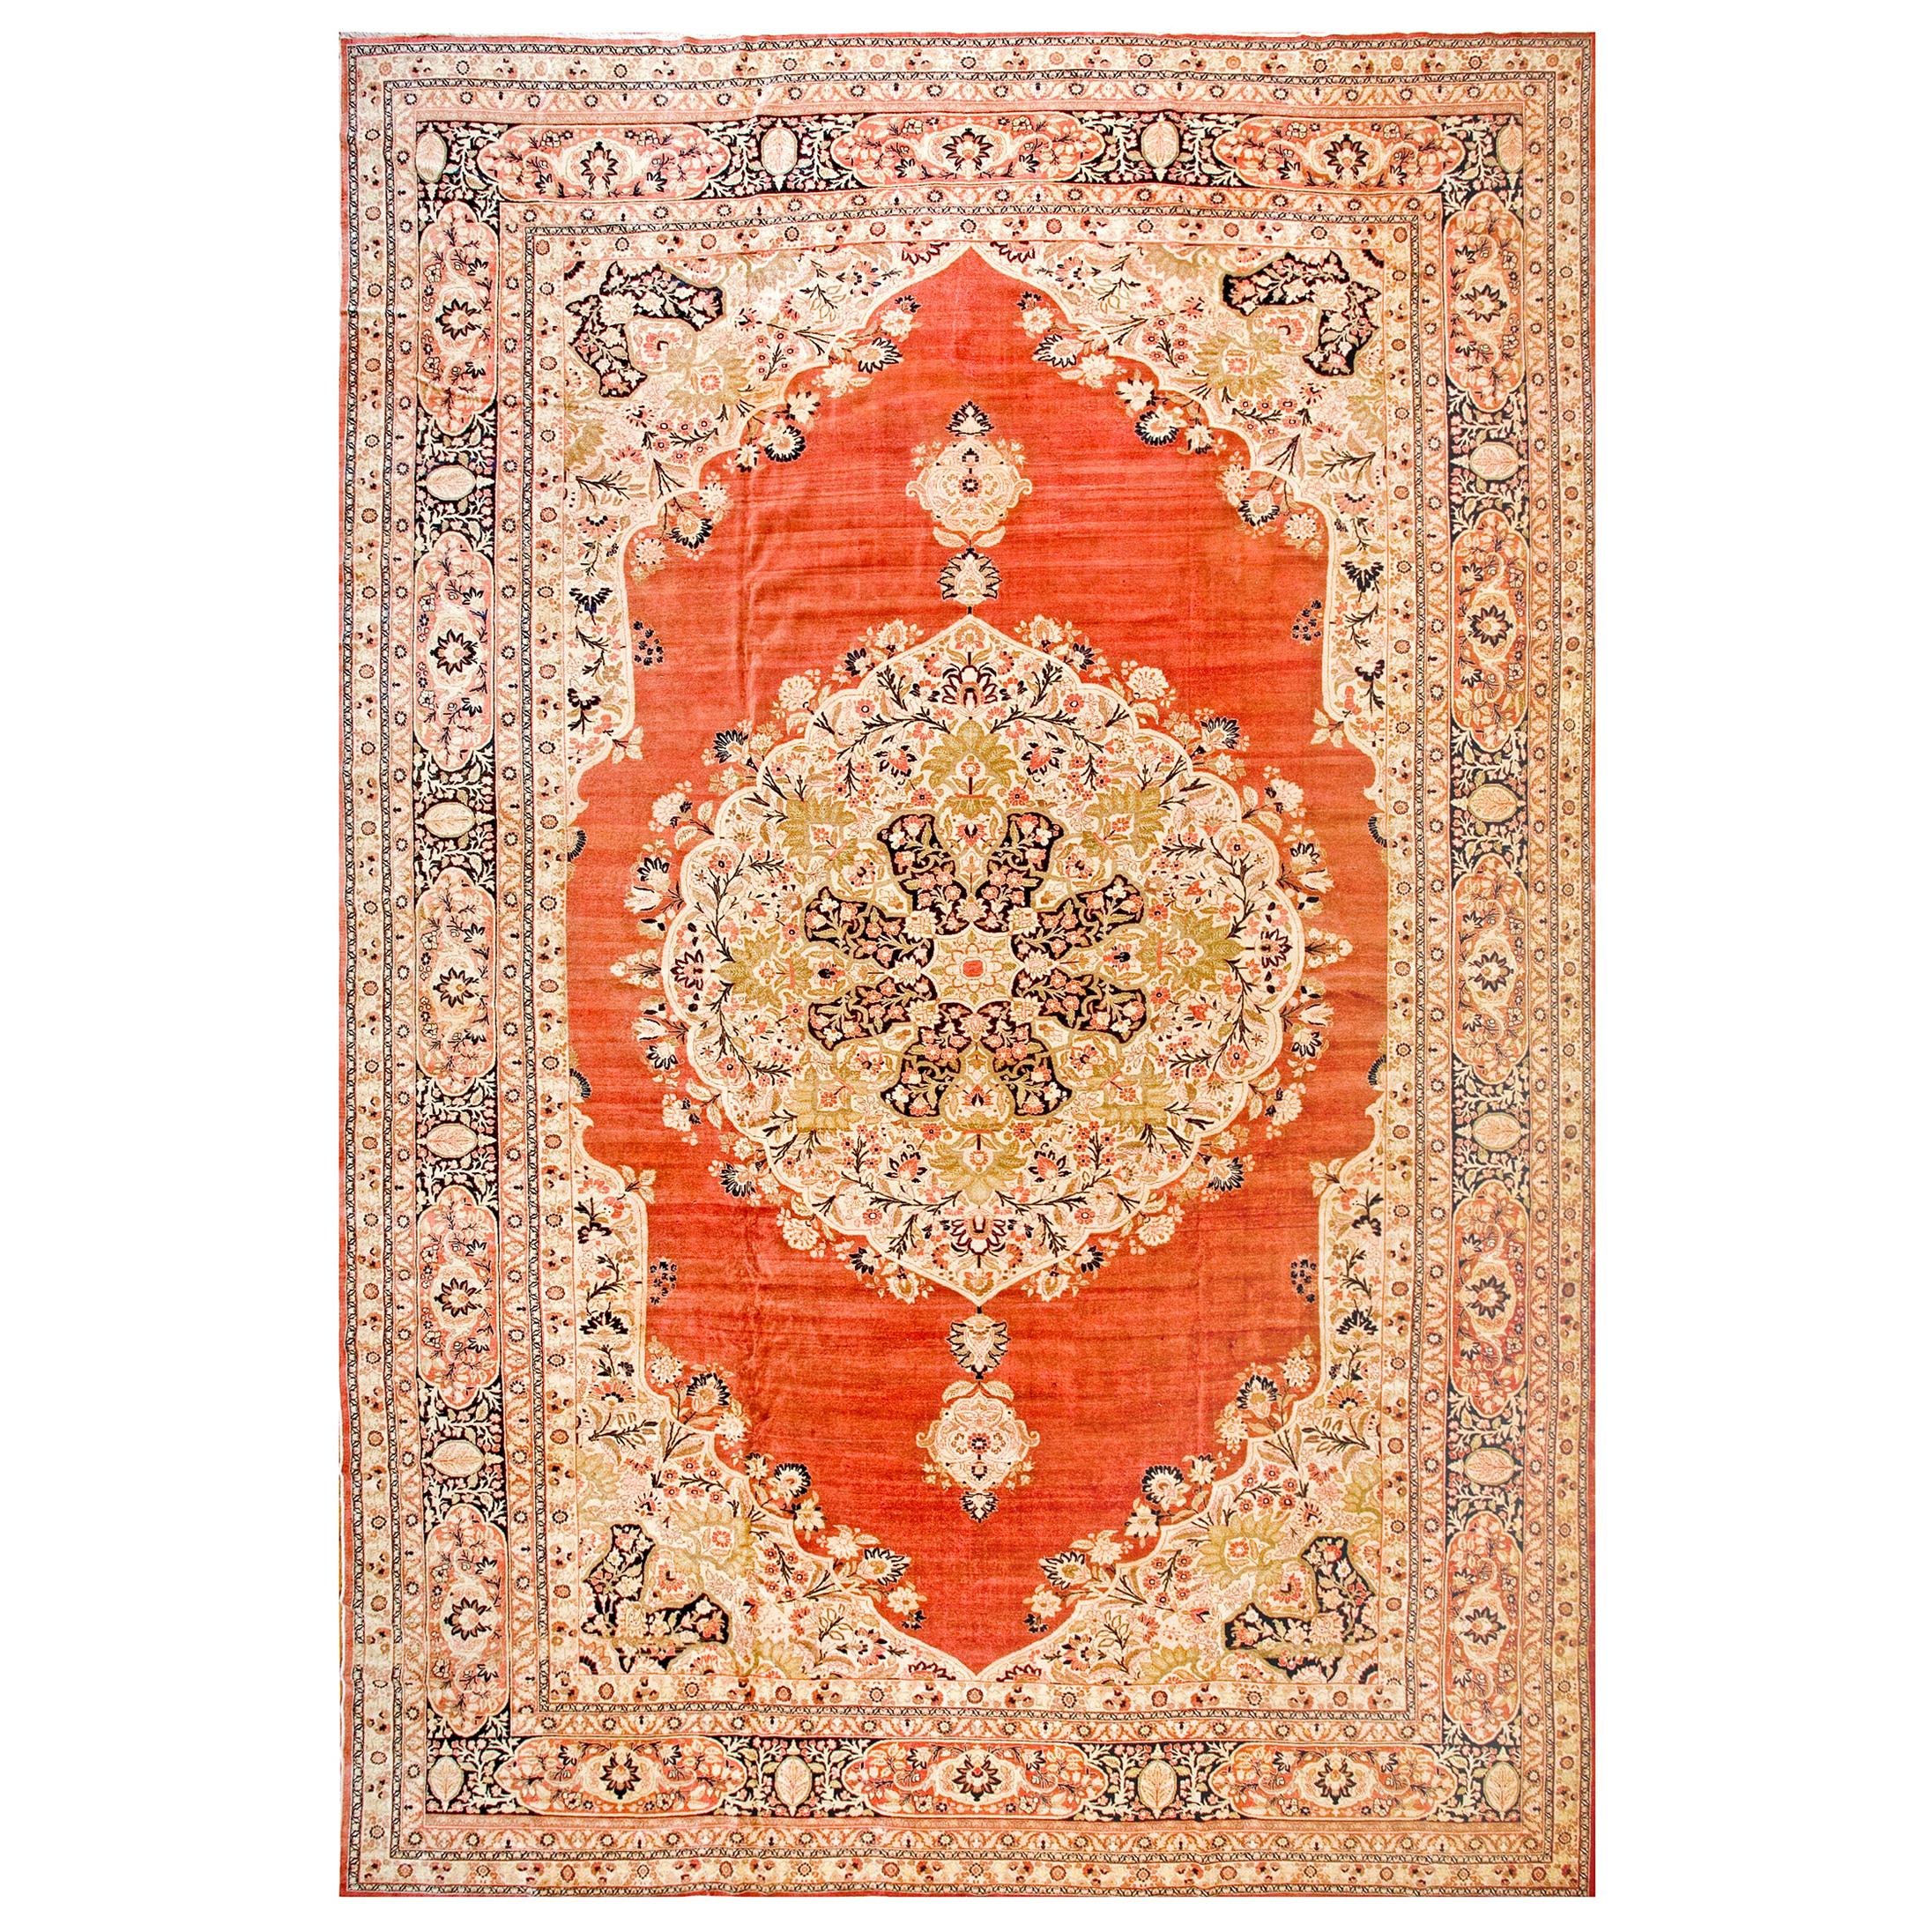 19th Century Persian Haji Jalili Tabriz Carpet ( 13'7" x 20'2" - 414 x 615 ) For Sale